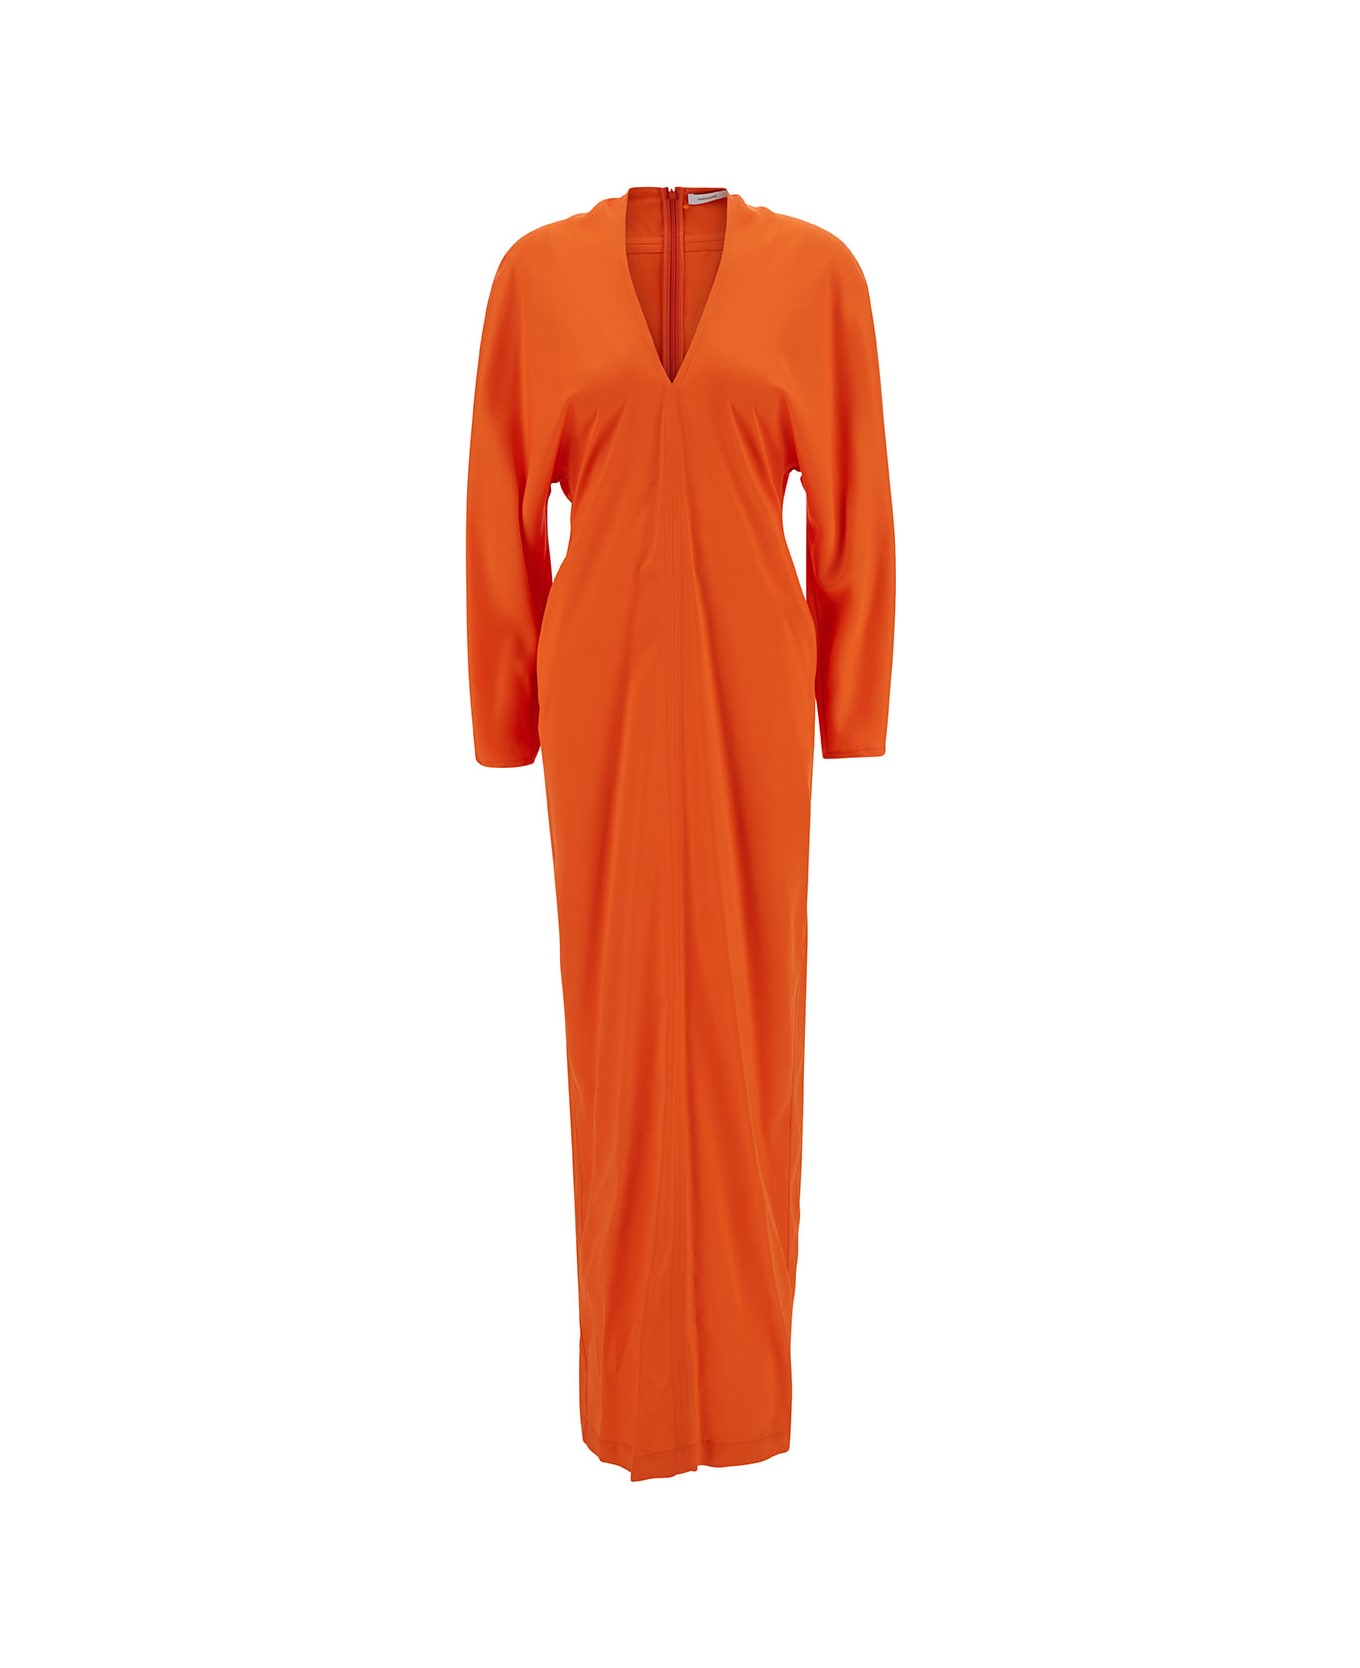 Ferragamo Long Orange Dress With Kimono Sleeves In Stretch Viscose Woman - Orange